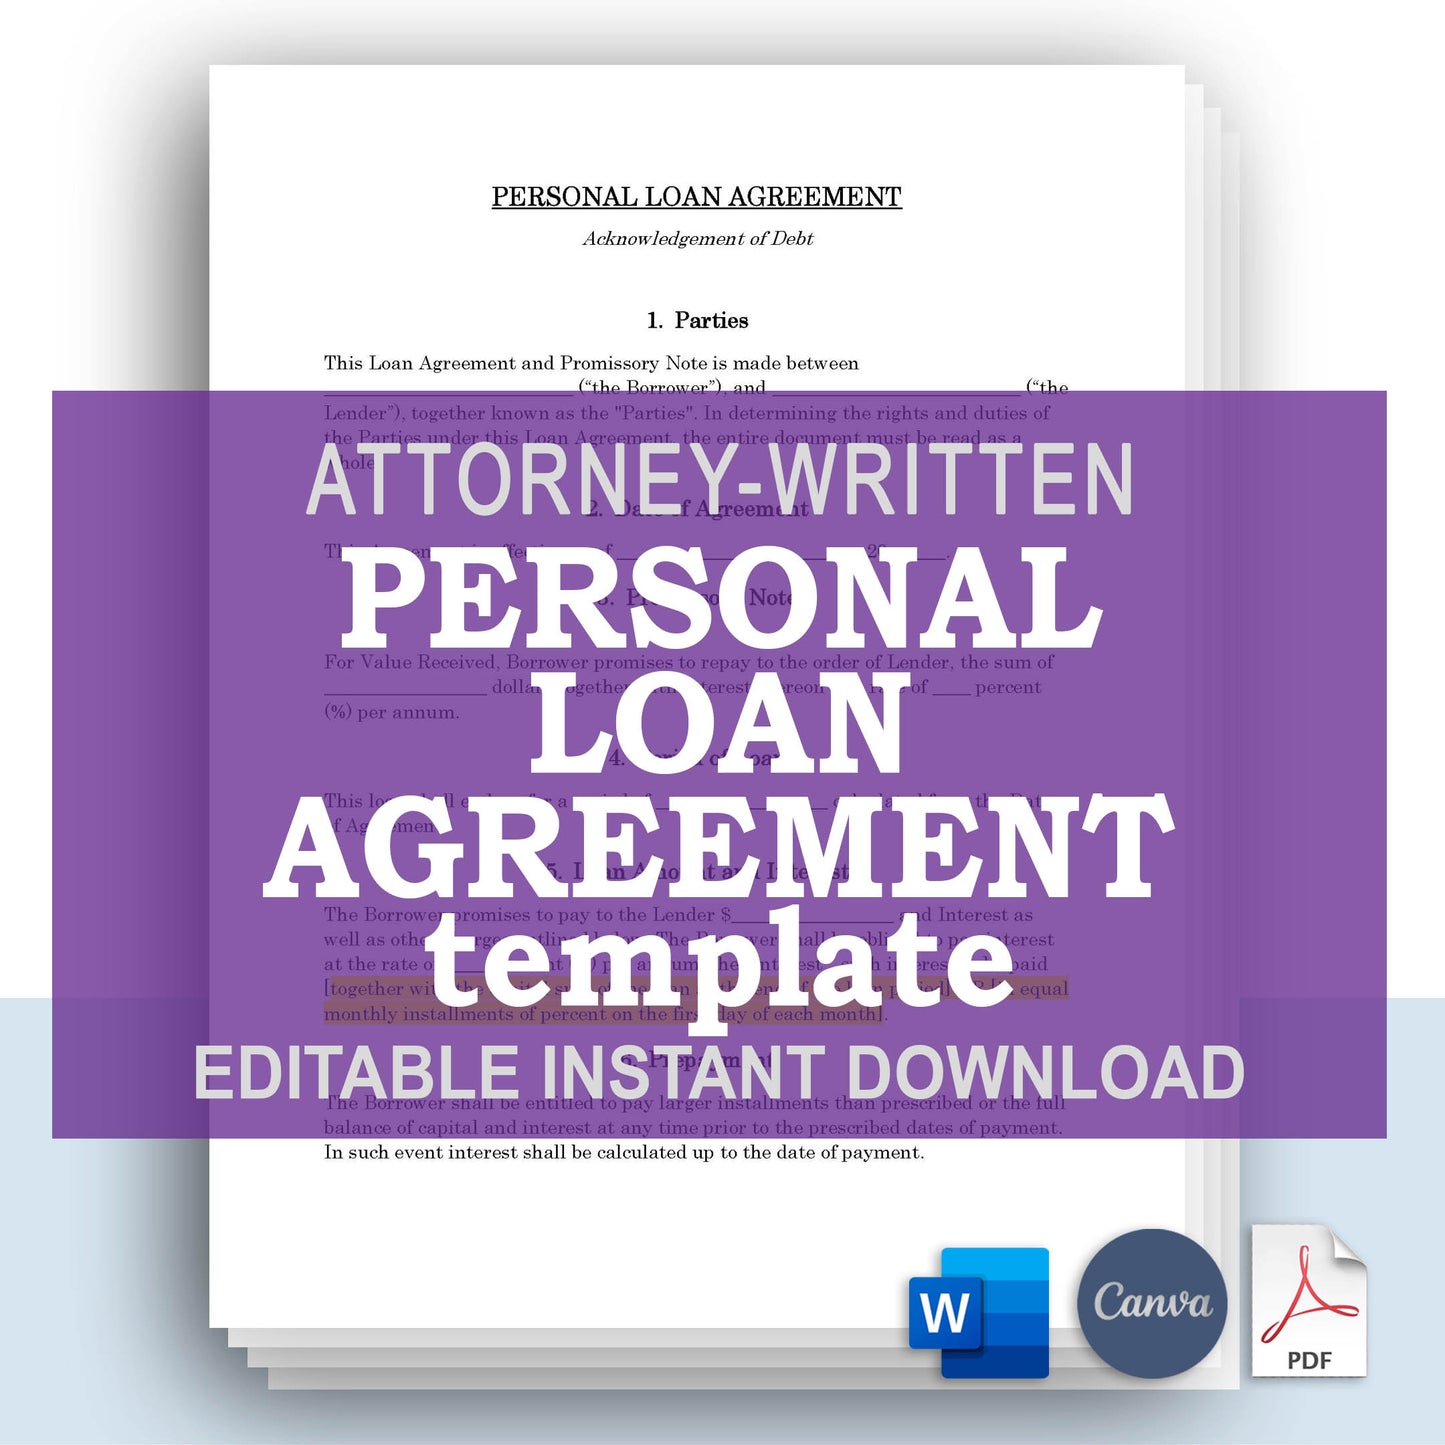 Personal Loan Agreement Template, Attorney-Written & Editable